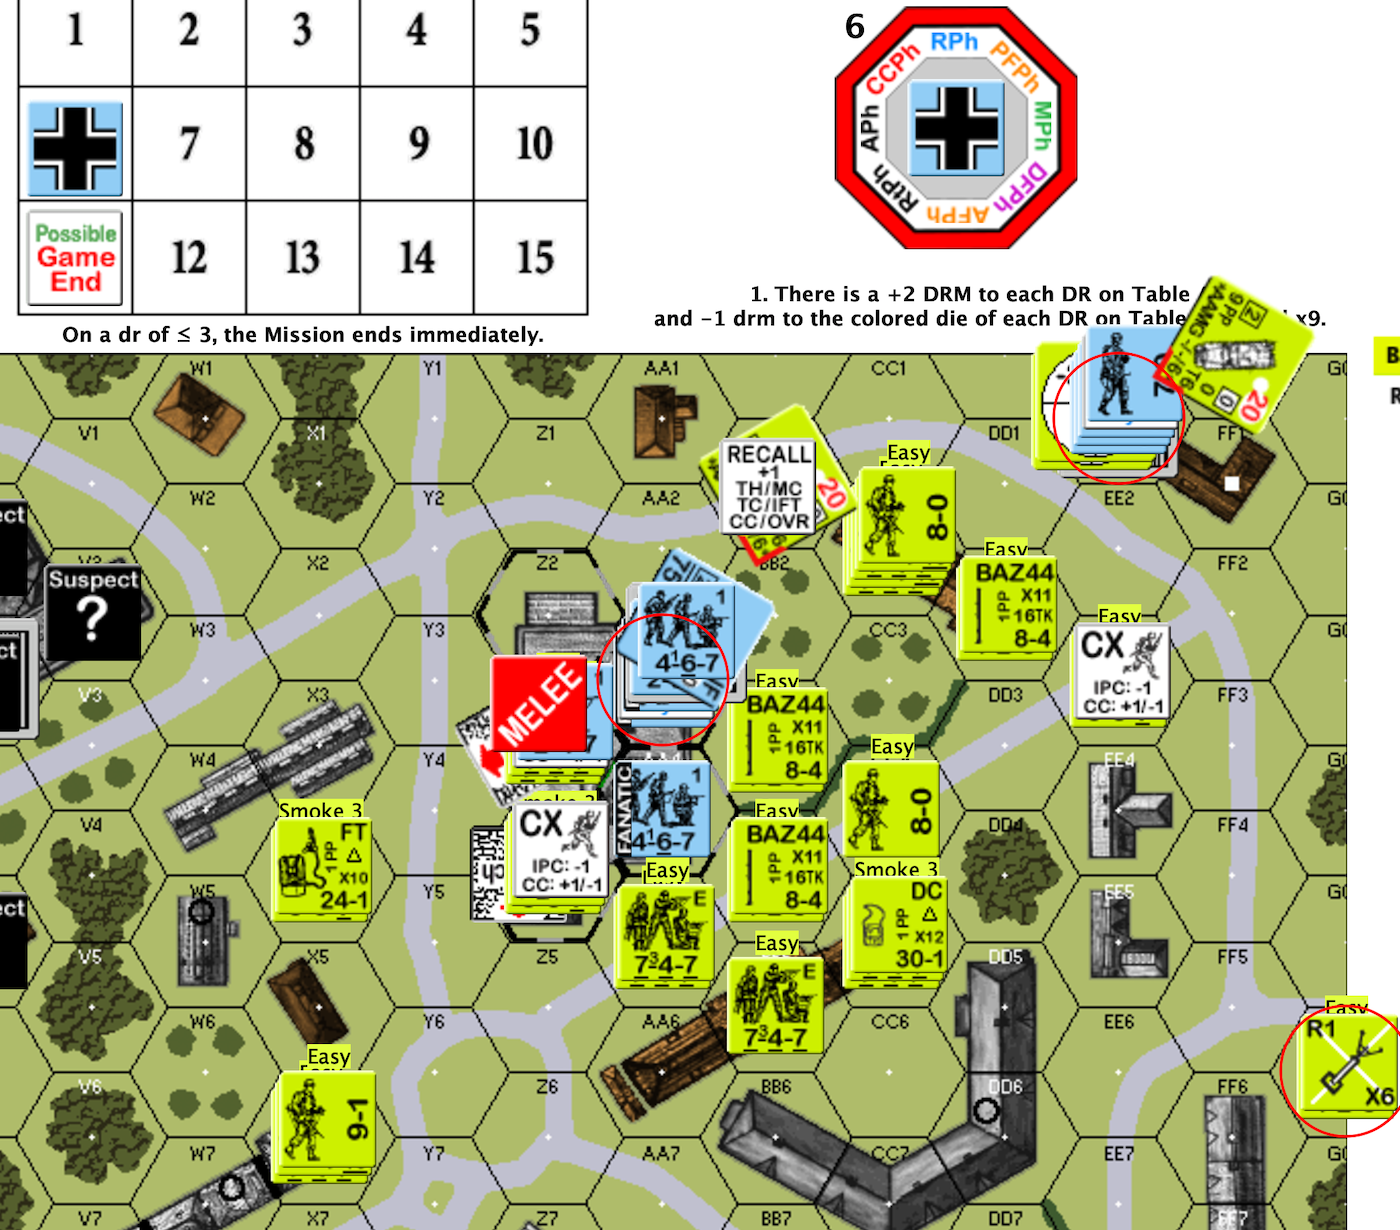 The Fortress scenario at turn 6